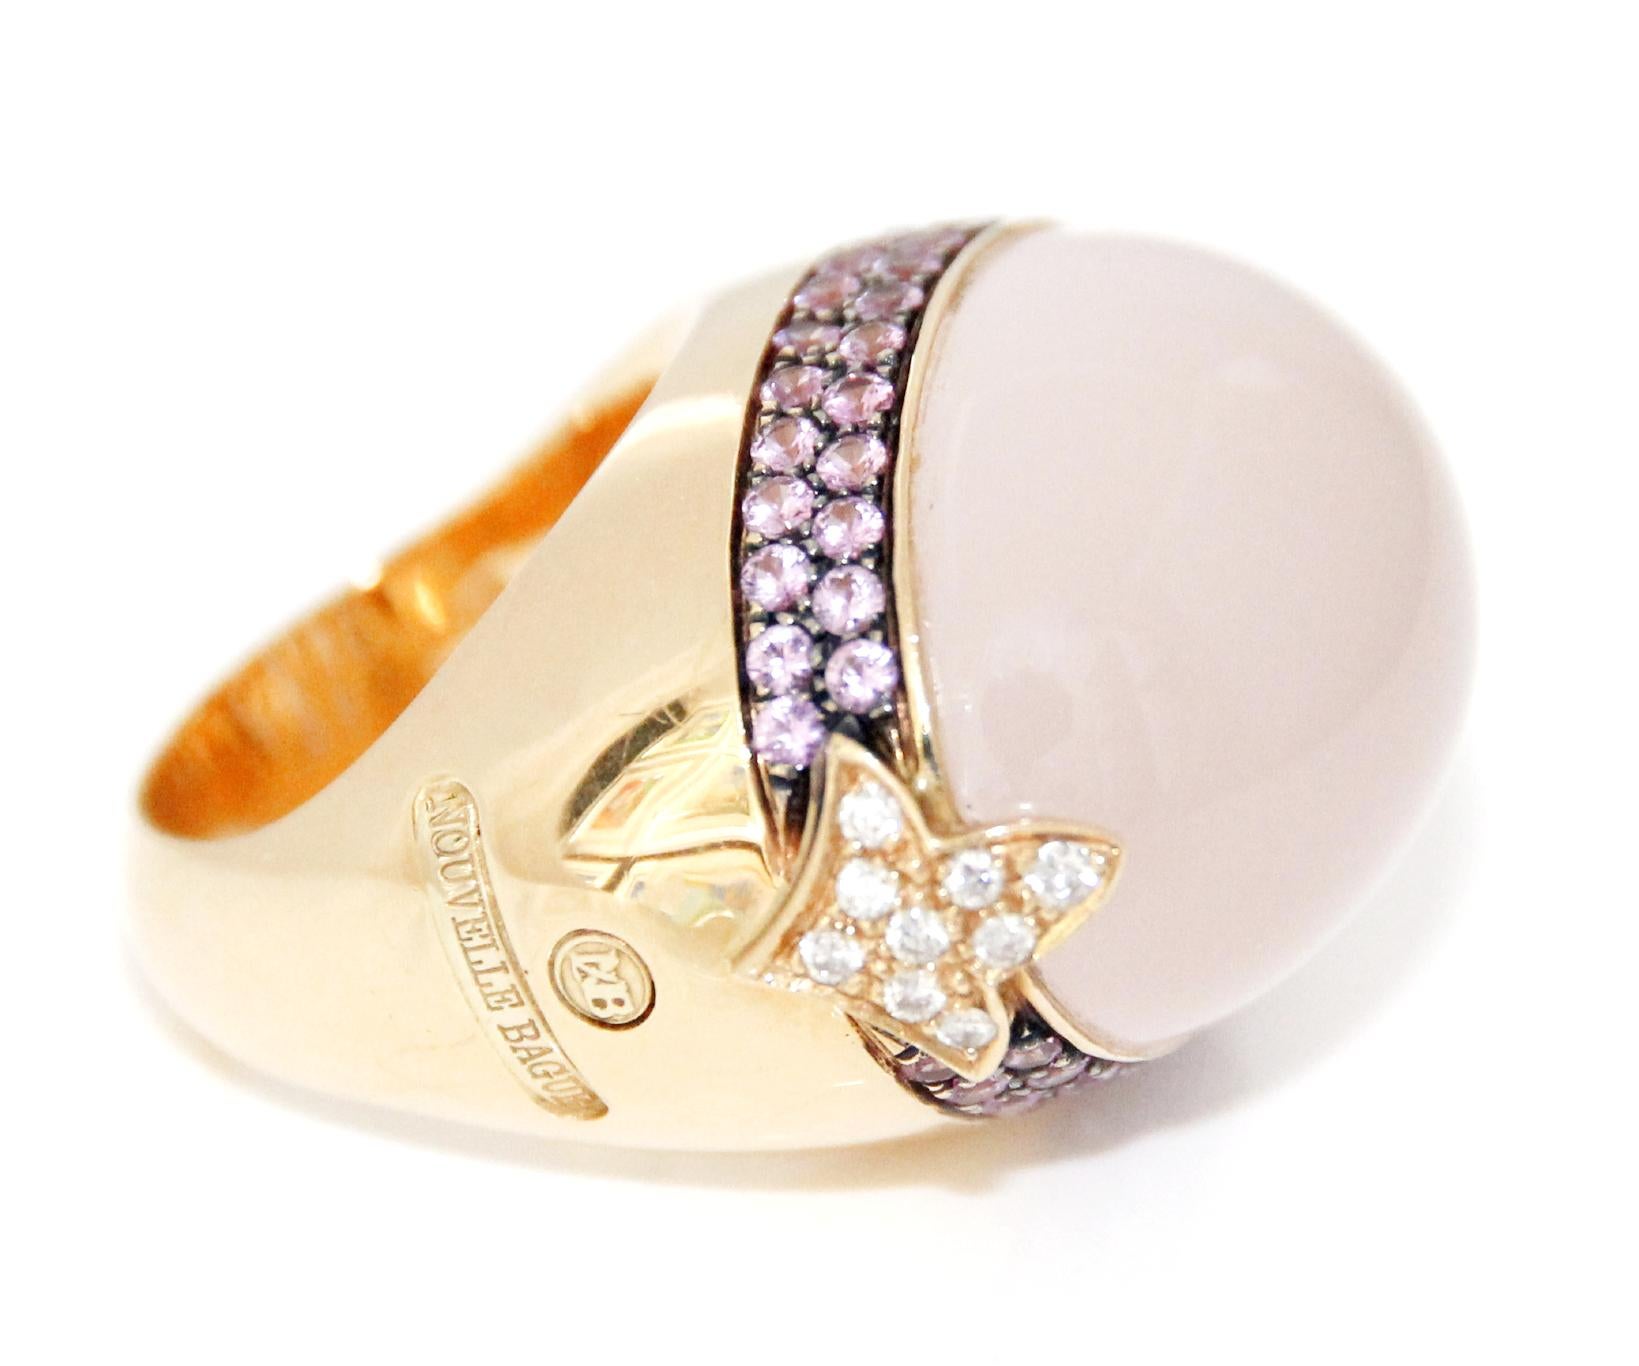 Nouvelle Bague 18K Rose Gold Diamond, Pink opal and Pink Sapphires  Ring
Diamonds 0.25ctw
Sapphires 1.35ctw
Size 6.5
Retail $9.300
